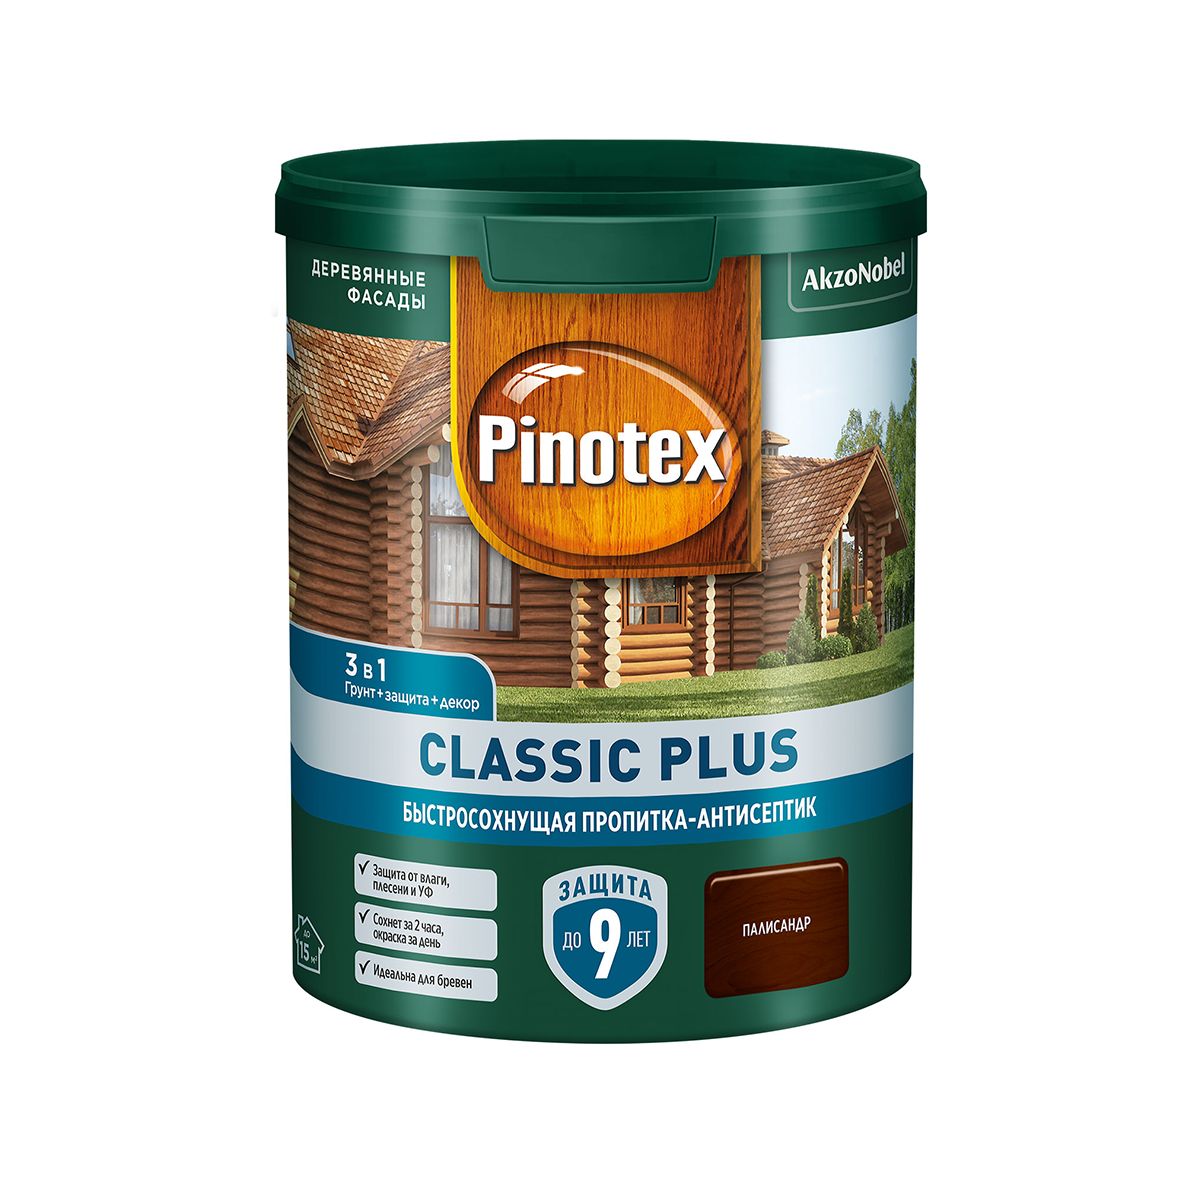 Пропитка-антисептик Pinotex Classic Plus 3 в 1,быстросохнущая, палисандр, 900 мл цветная пропитка антисептик renner